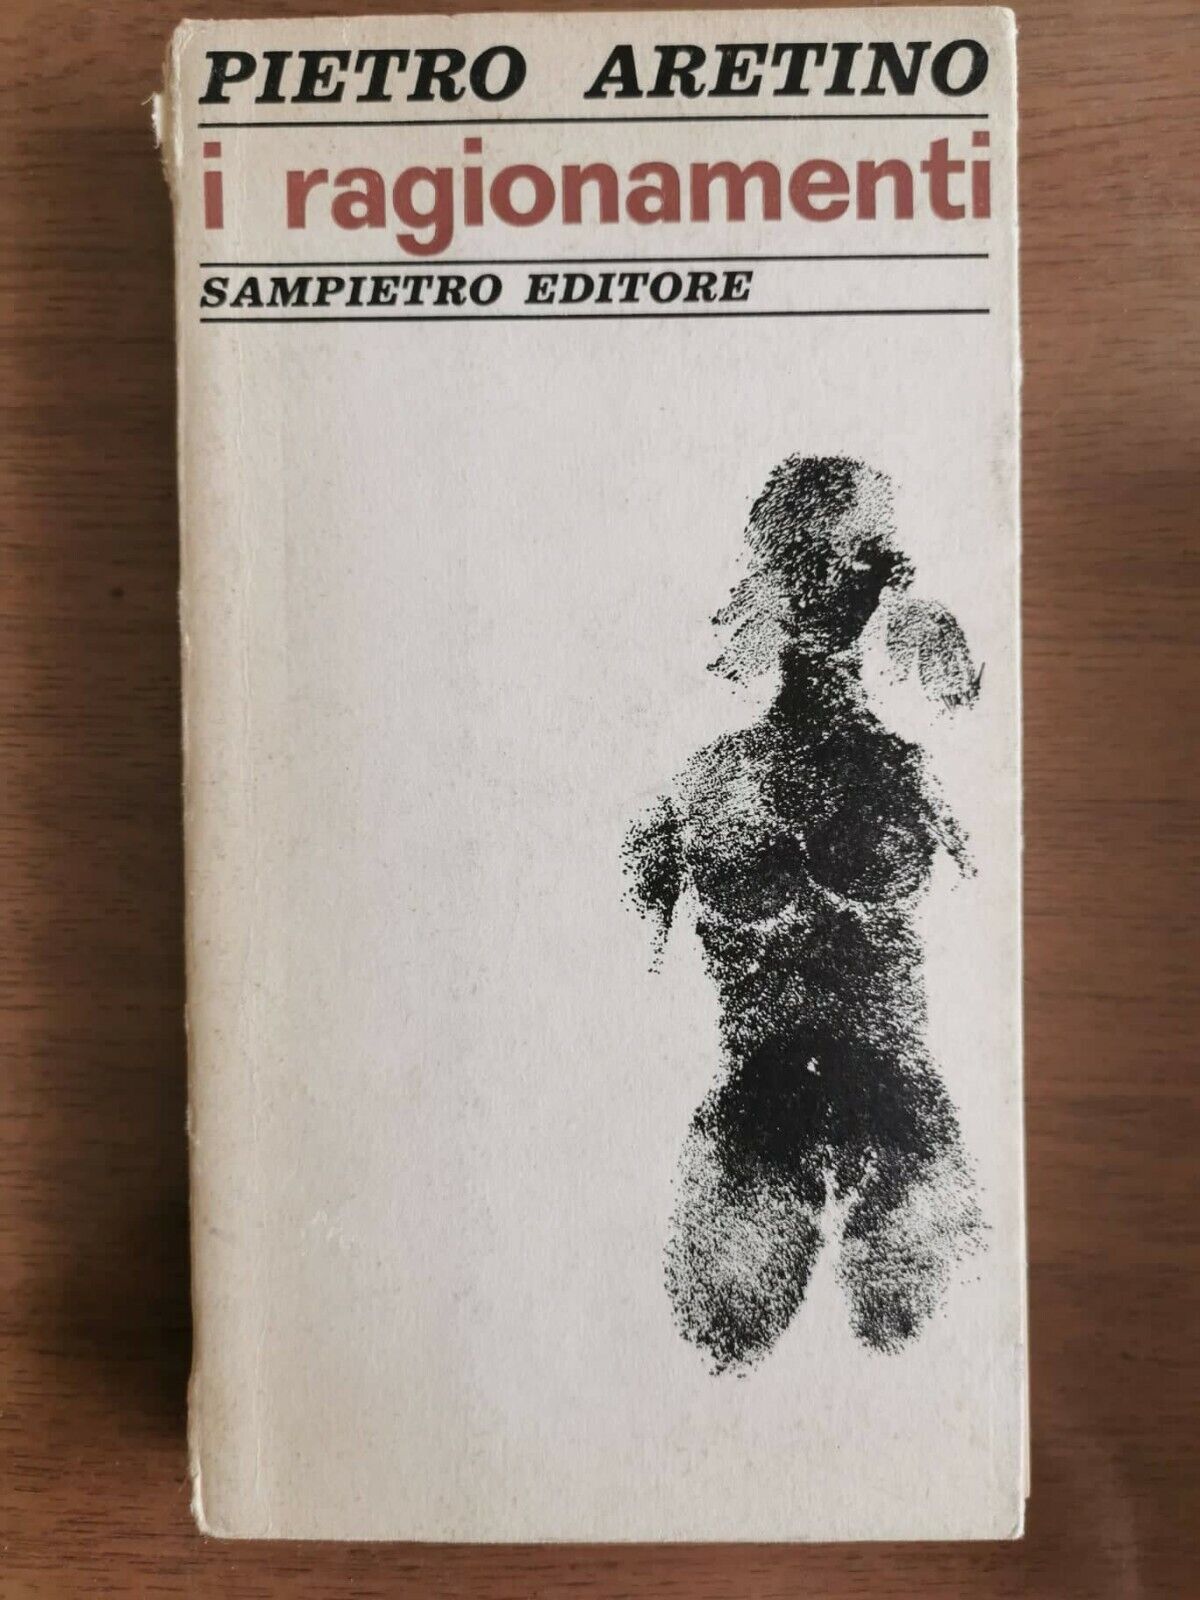 I ragionamenti - P. Aretino - Sampietro editore - 1970 - AR